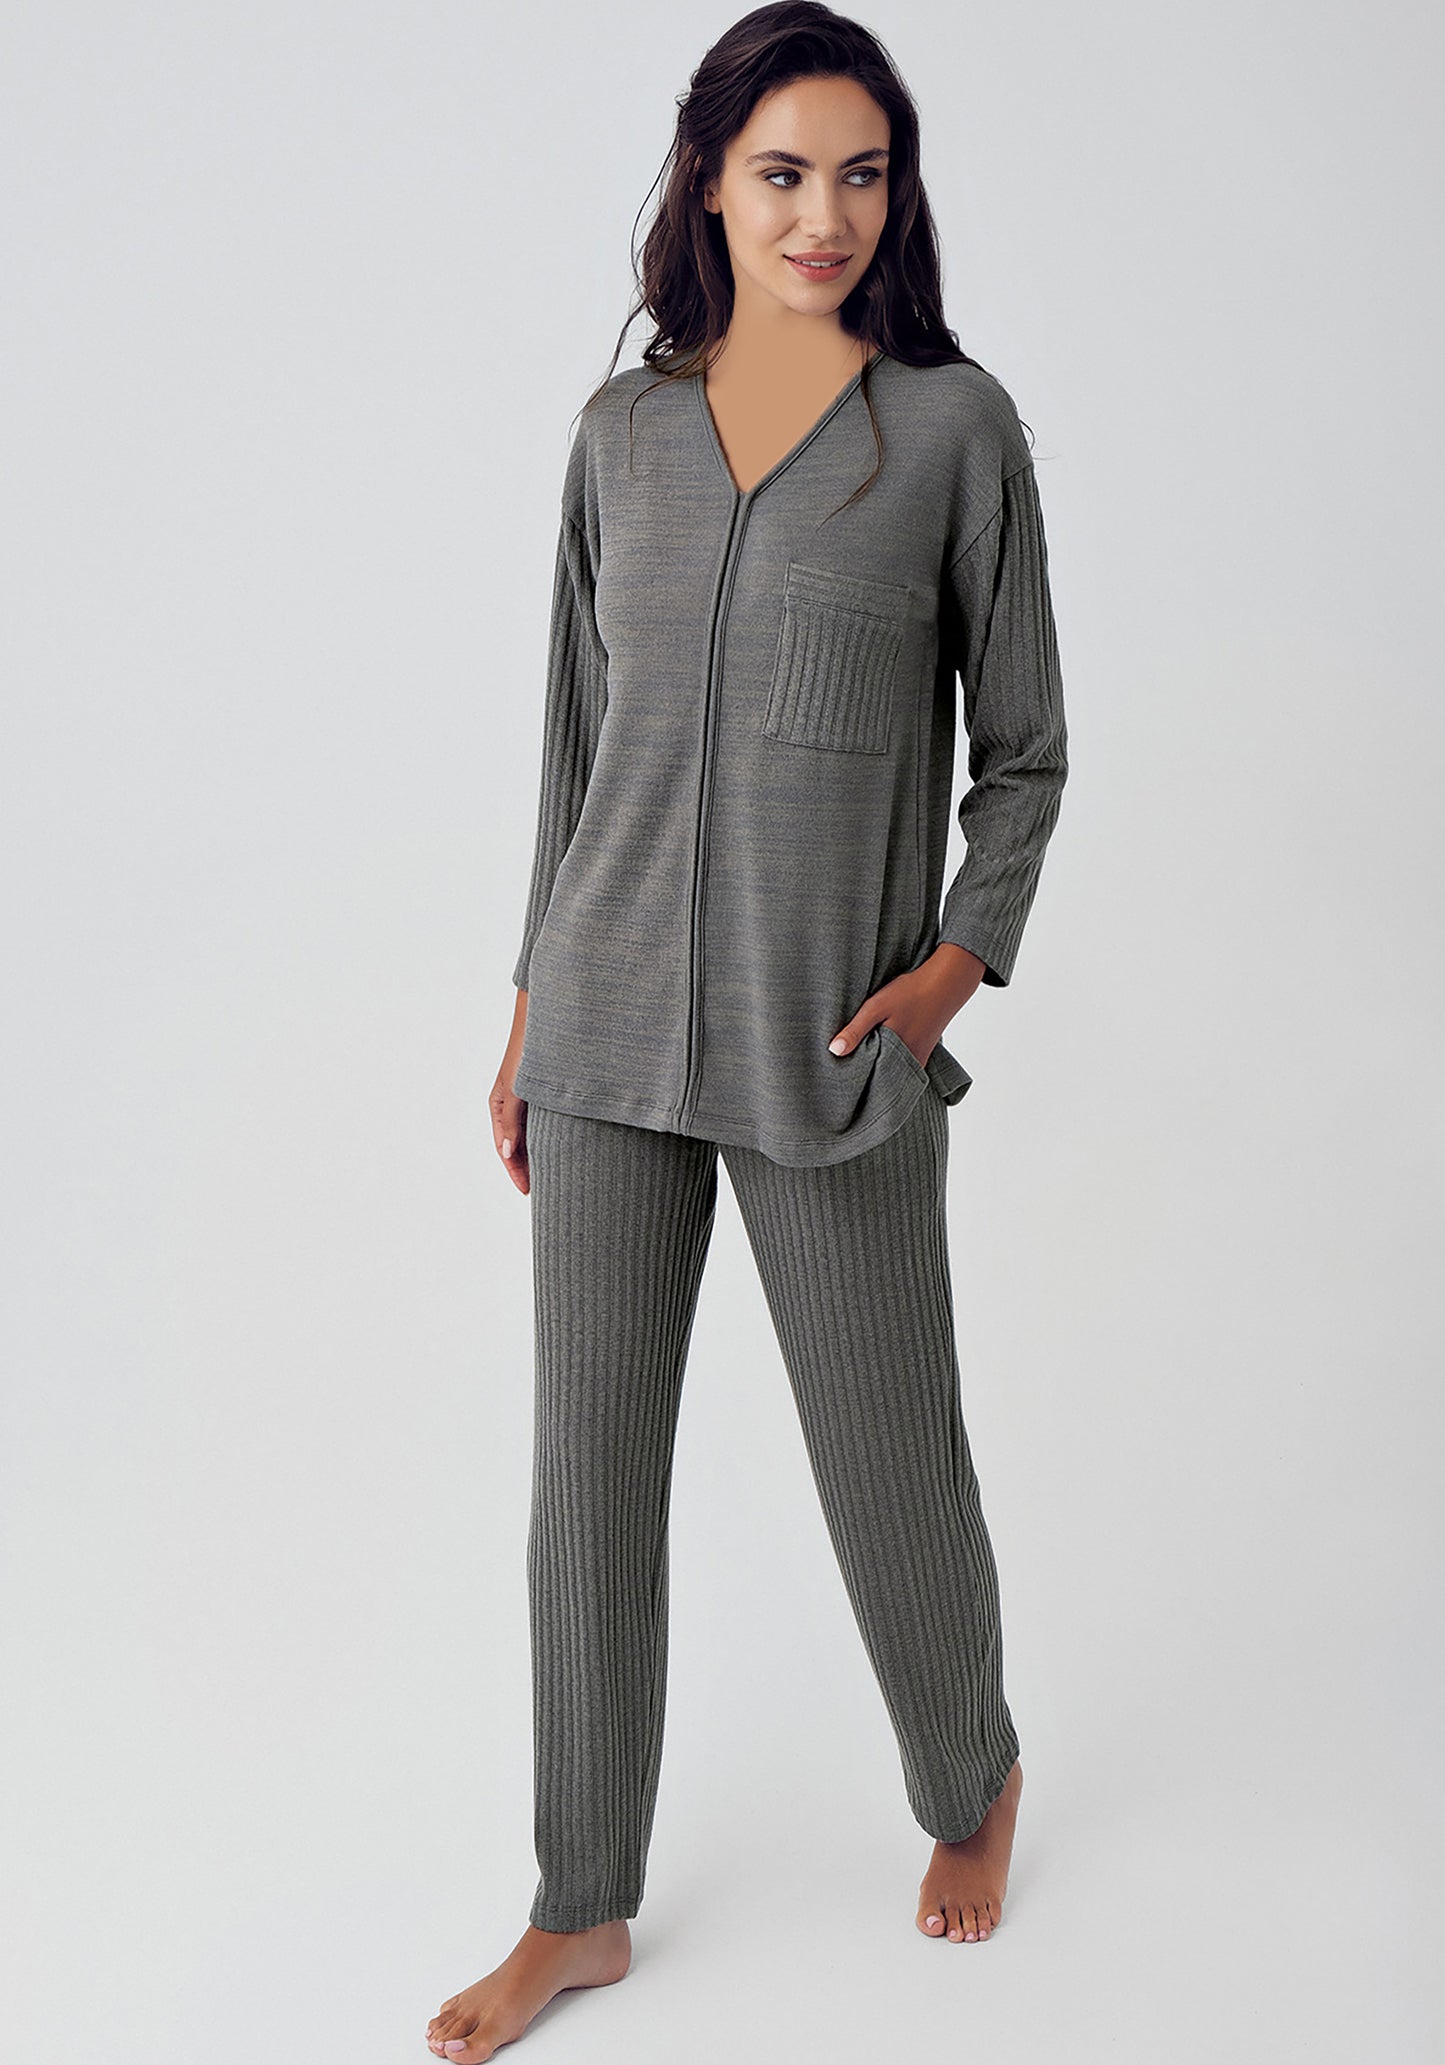 S&L Jacquard Pajama Set